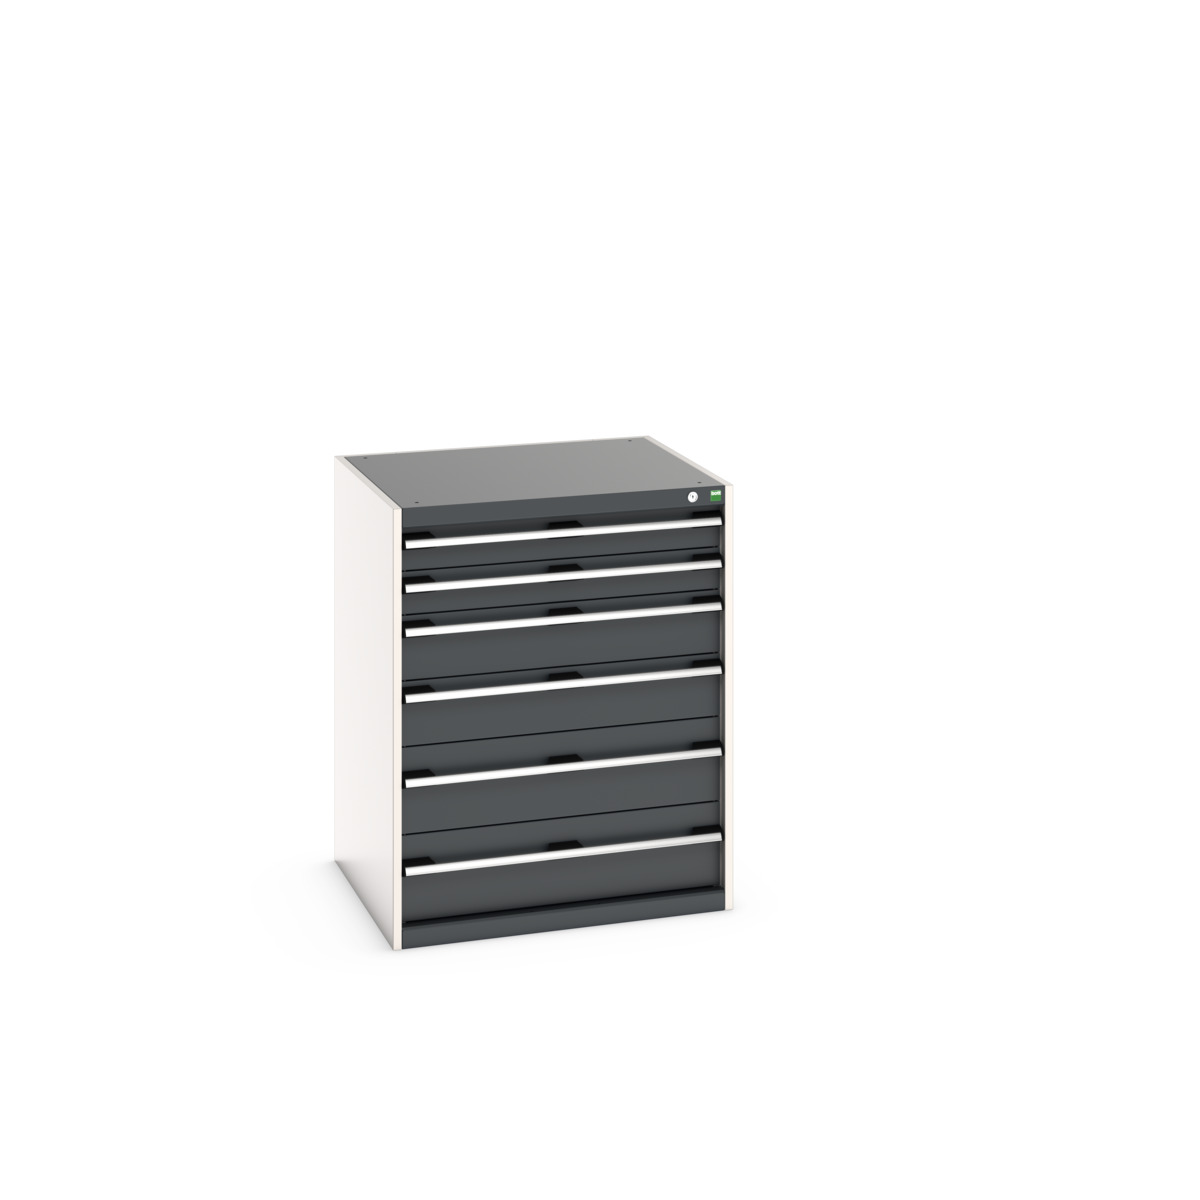 40028019. - cubio drawer cabinet 